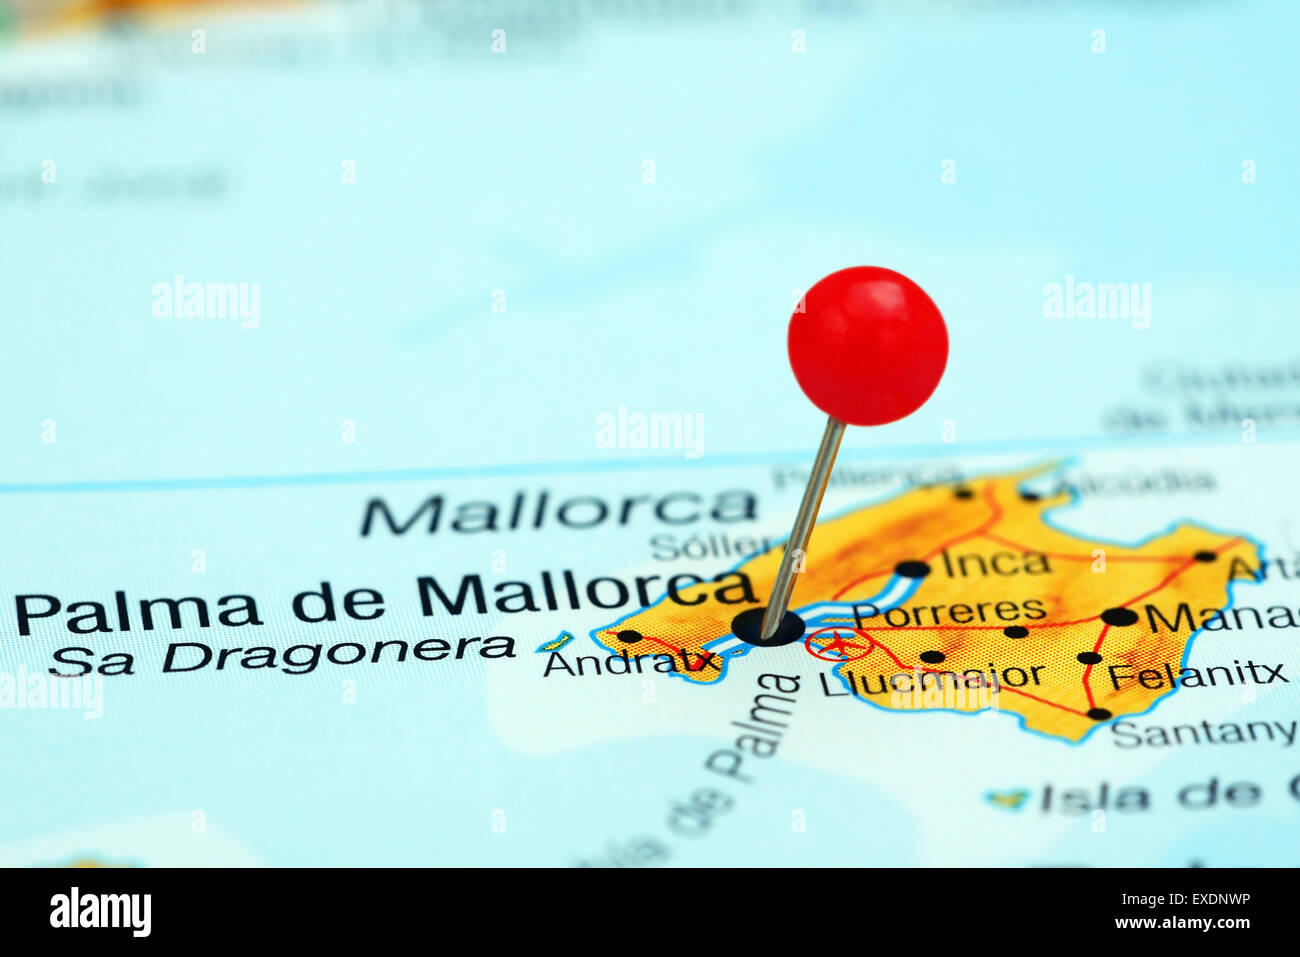 Palma de Mallorca pinned on a map of europe Stock Photo